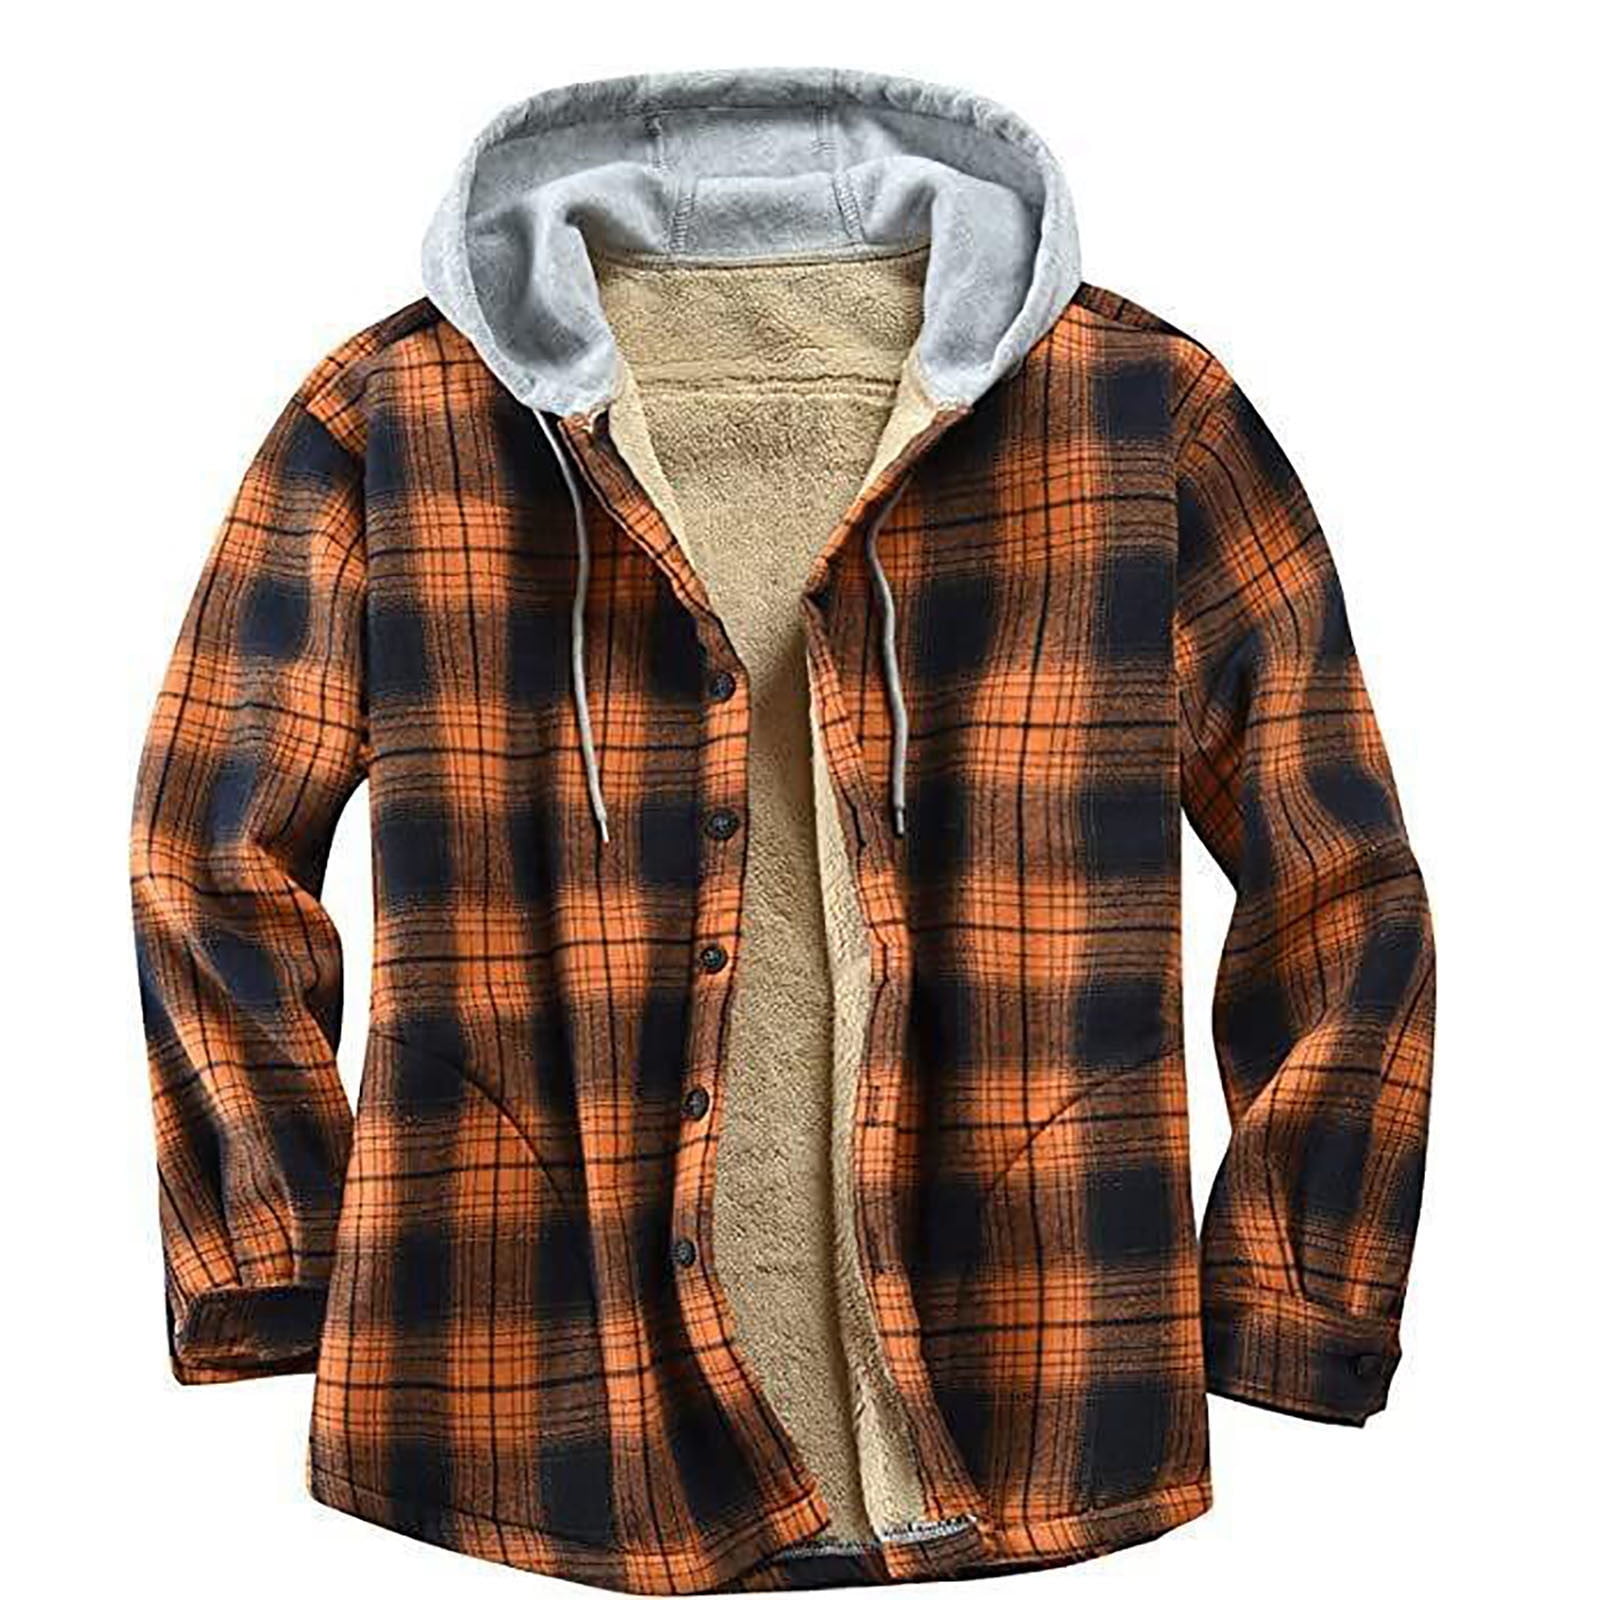 Men's Flannel Shirt Jacket Fleece Lined Plaid Coat Full Zip Up Hoodie  Winter Outwear,Mens Sherpa Lined Zipper Hooded Plaid Shirt Jacket 